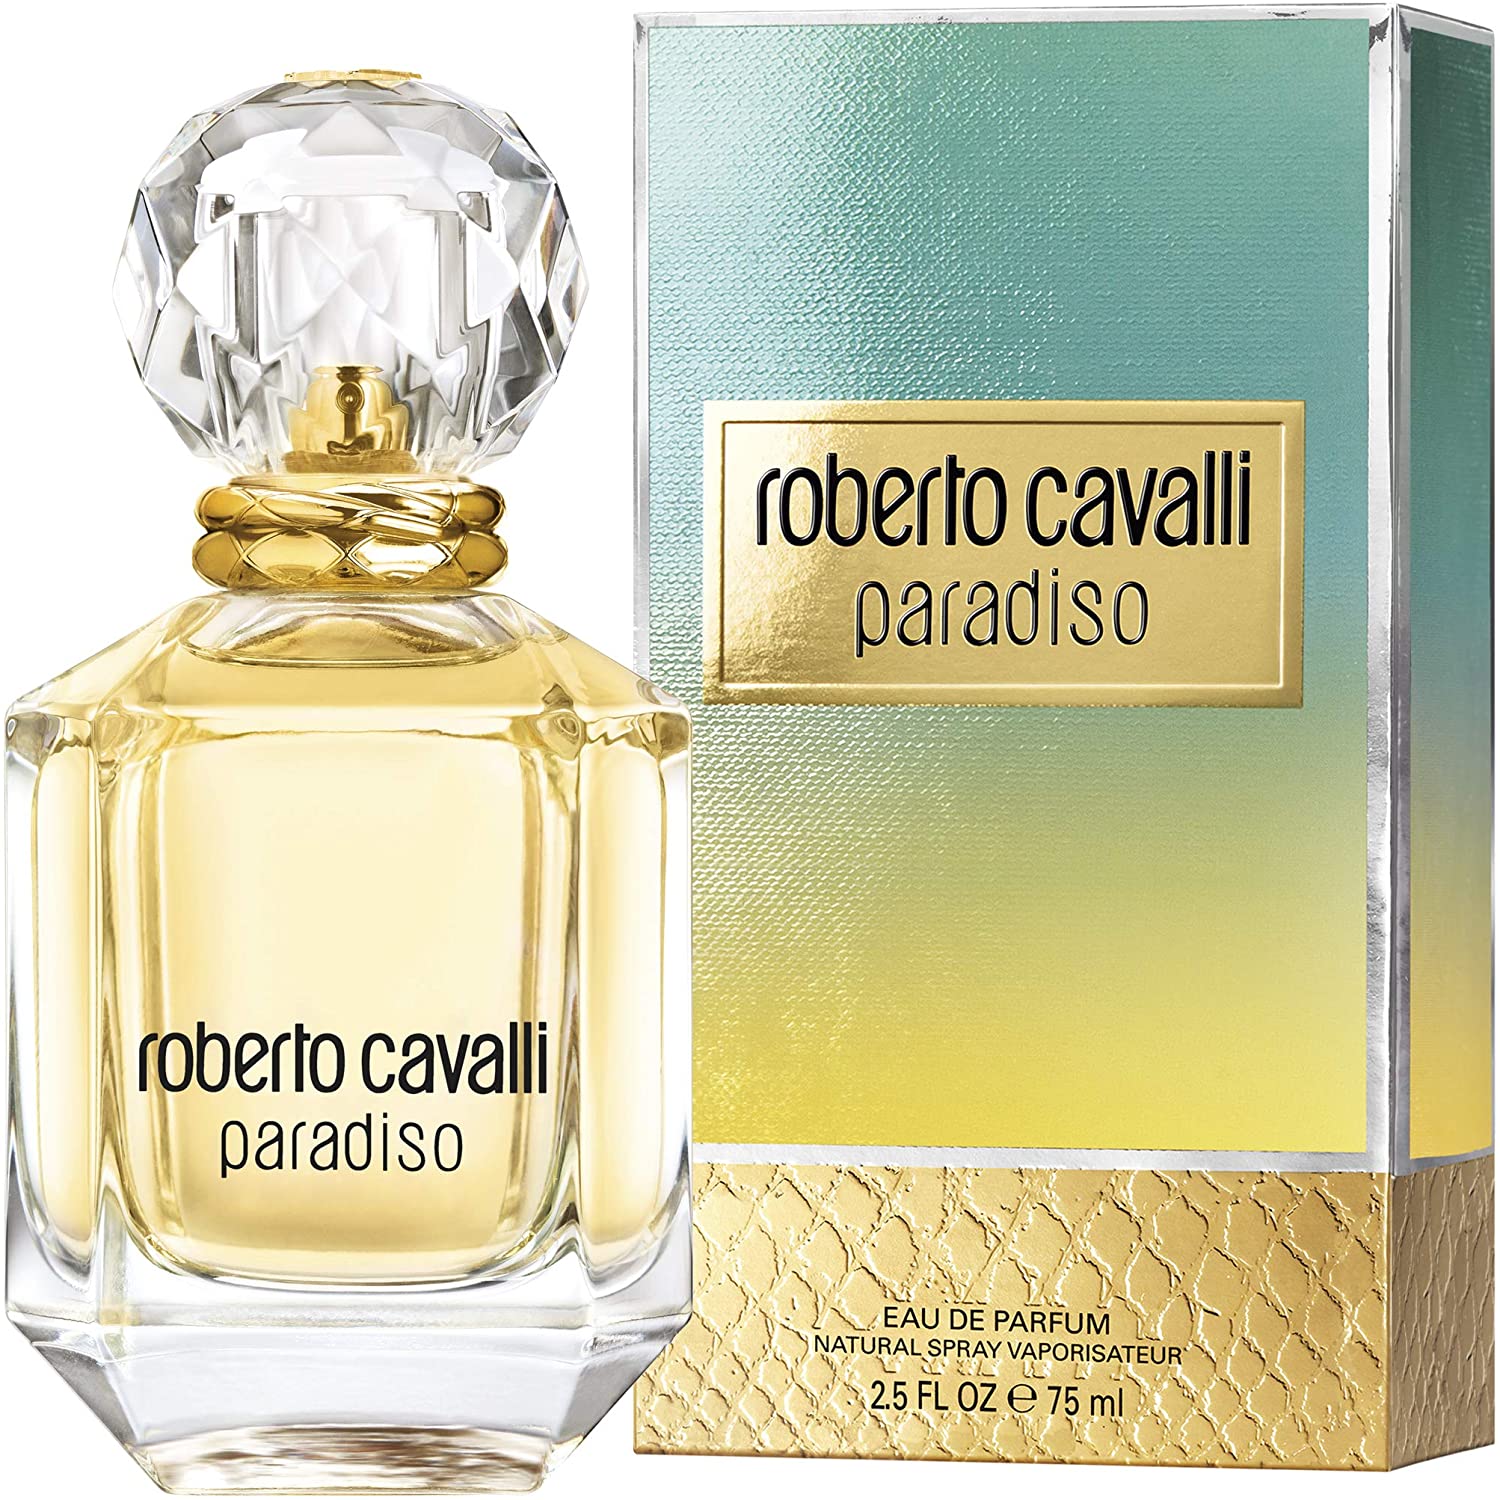 Roberto Cavalli Paradiso - perfumes for women - Eau de Parfum, 75ml